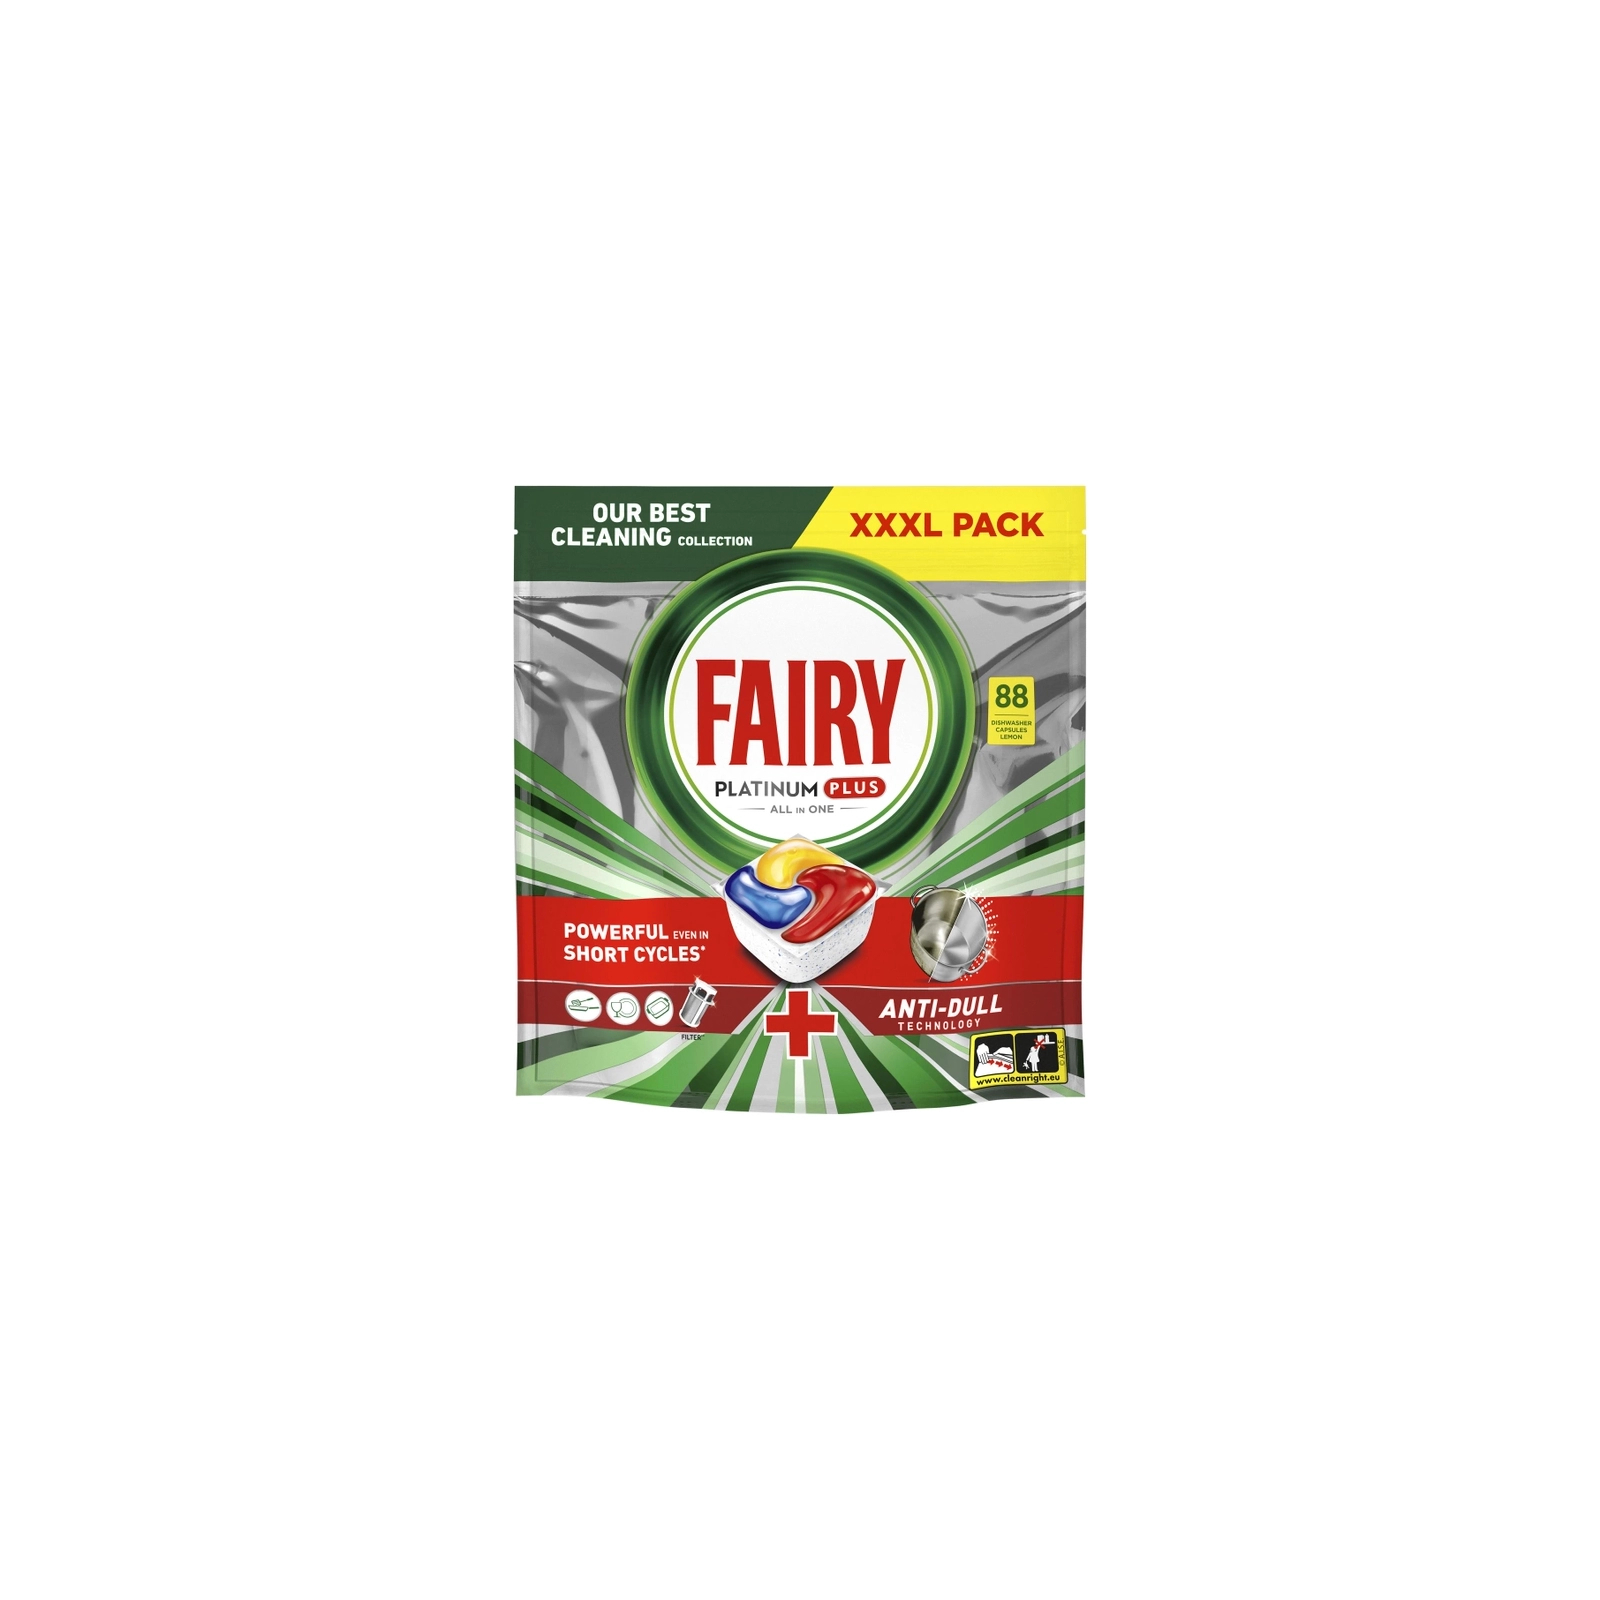 Таблетки для посудомоечных машин Fairy Platinum Plus All in One Lemon 60 шт. (8001090952158)